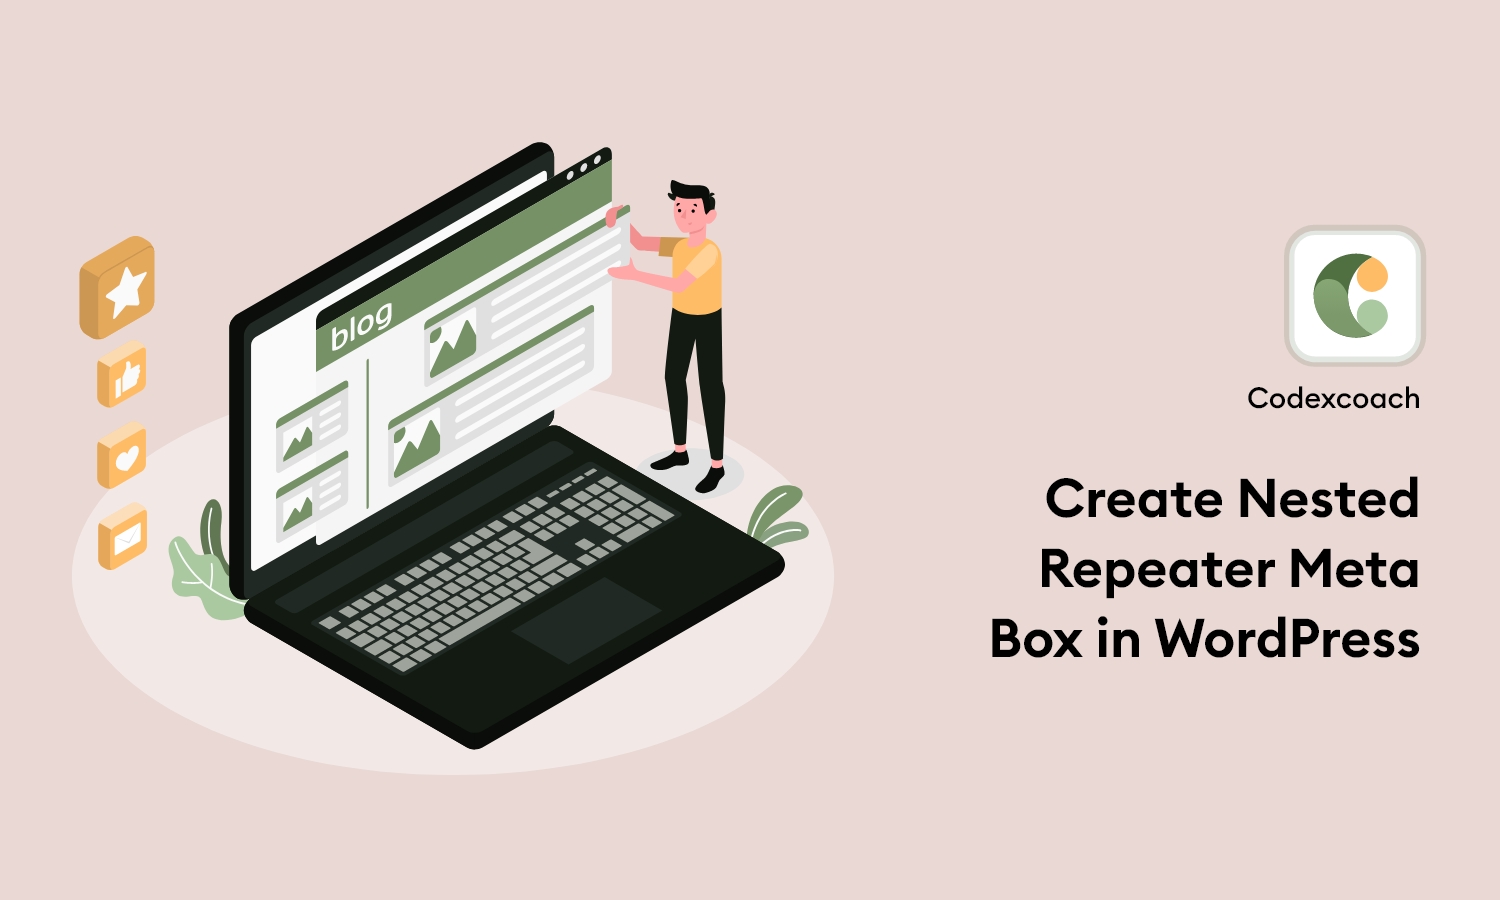 Create Nested Repeater Meta Box in WordPress